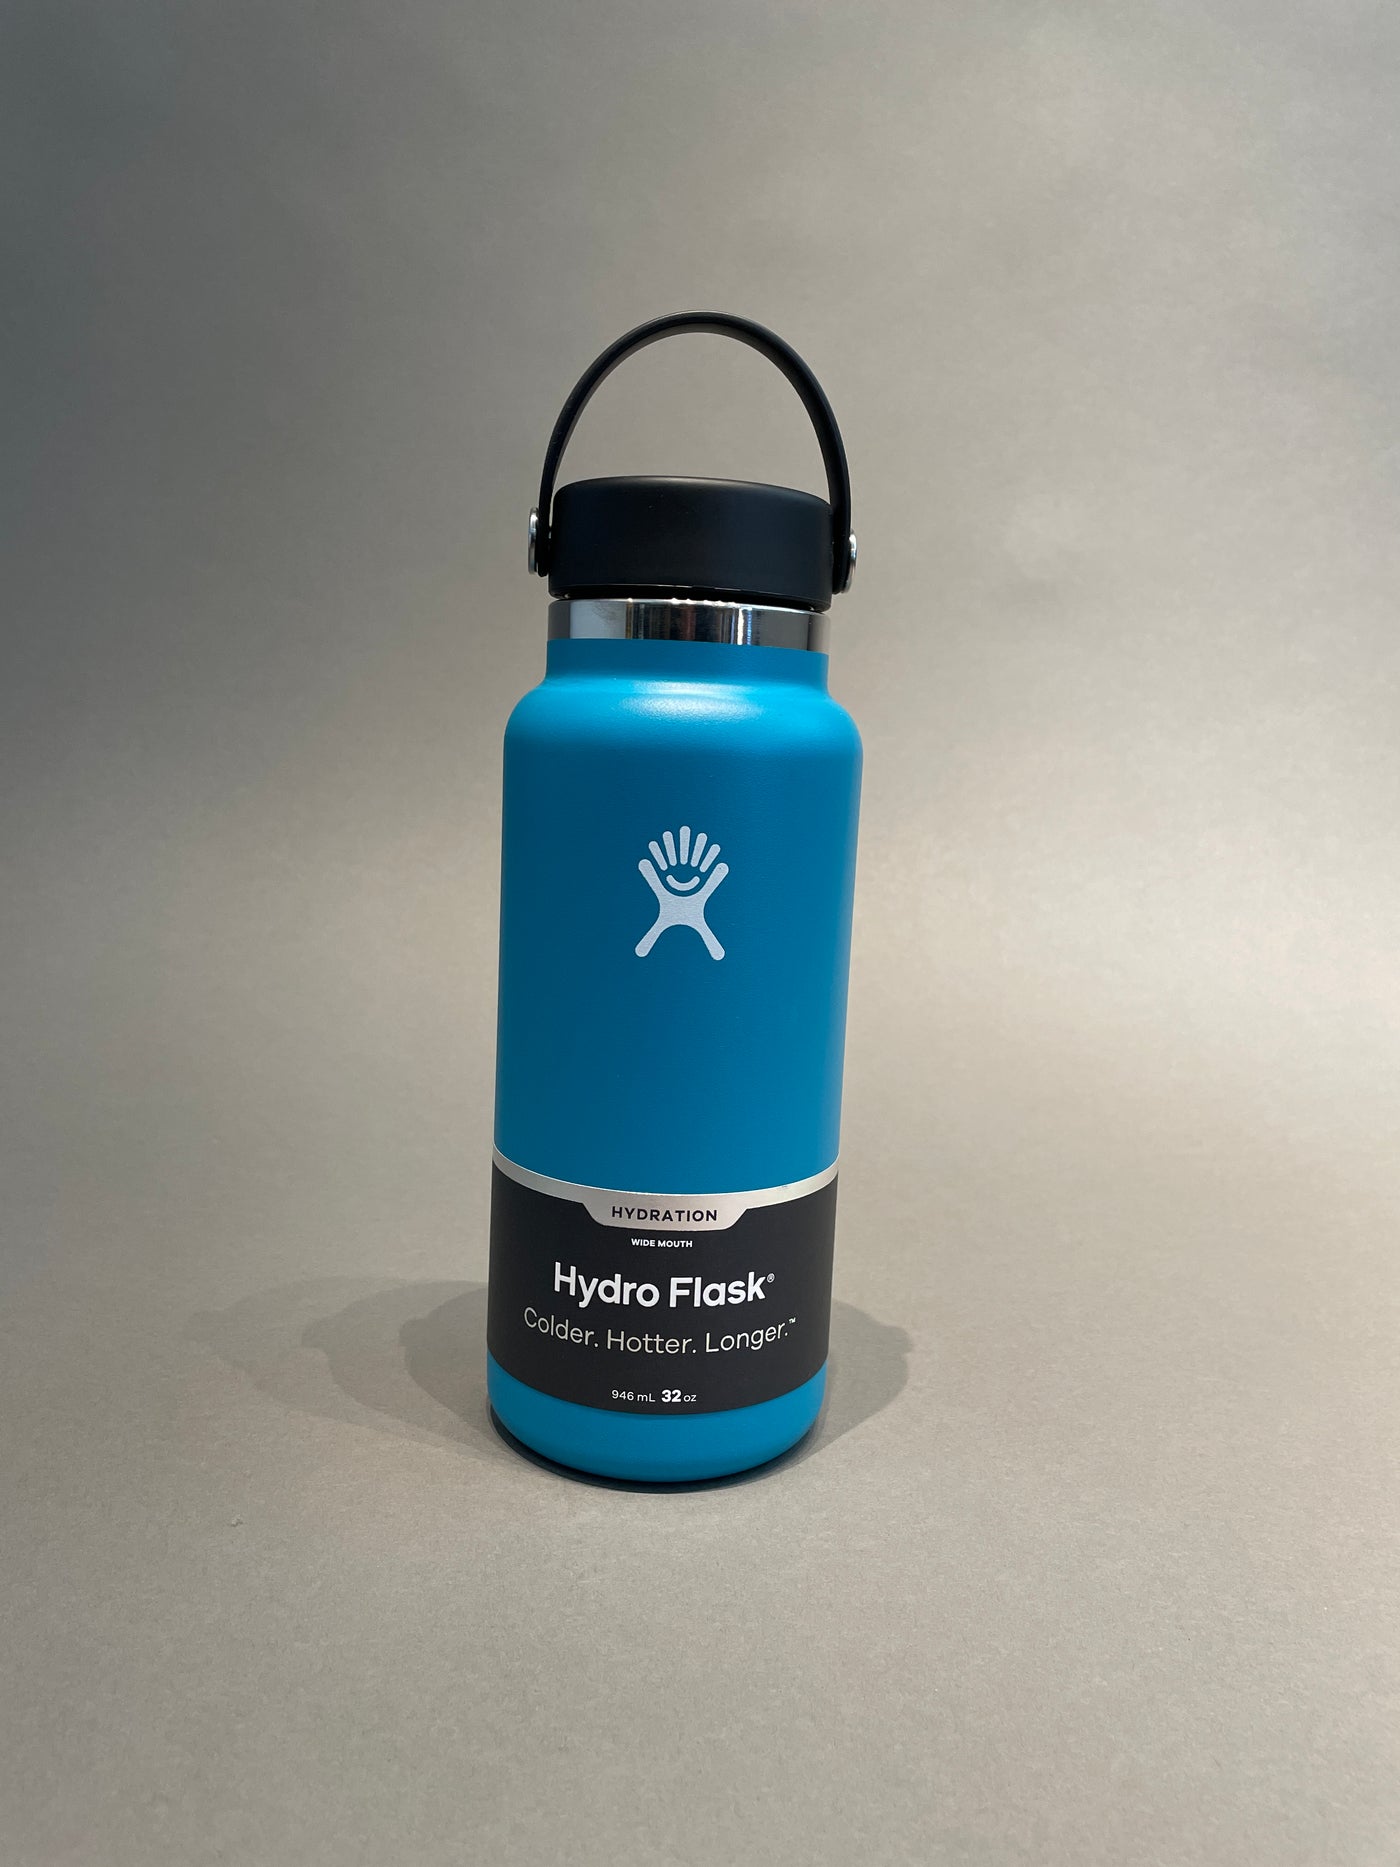 Hydro Flask 32 oz. Wide Mouth Flex Straw Cap Bottle White